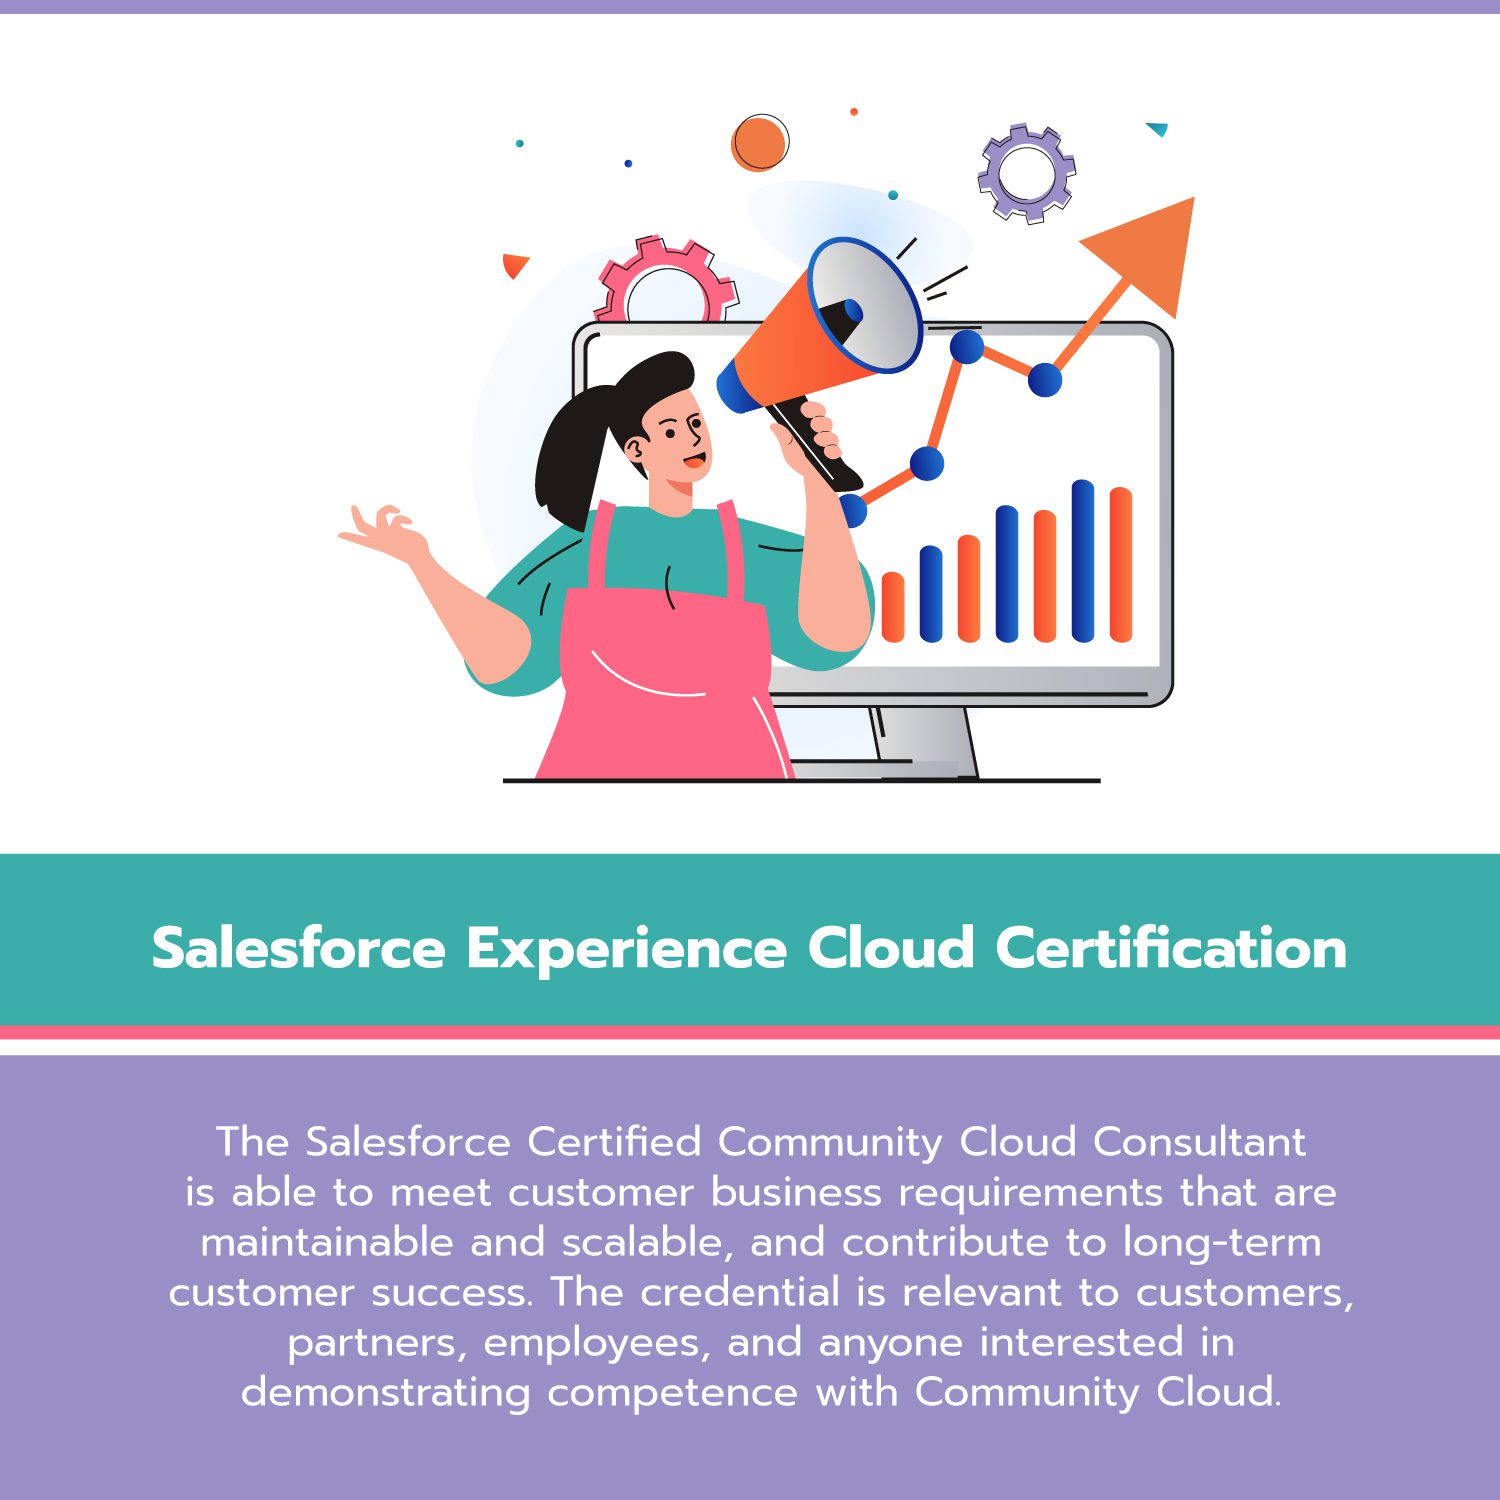 Salesforce Experience Cloud Certification